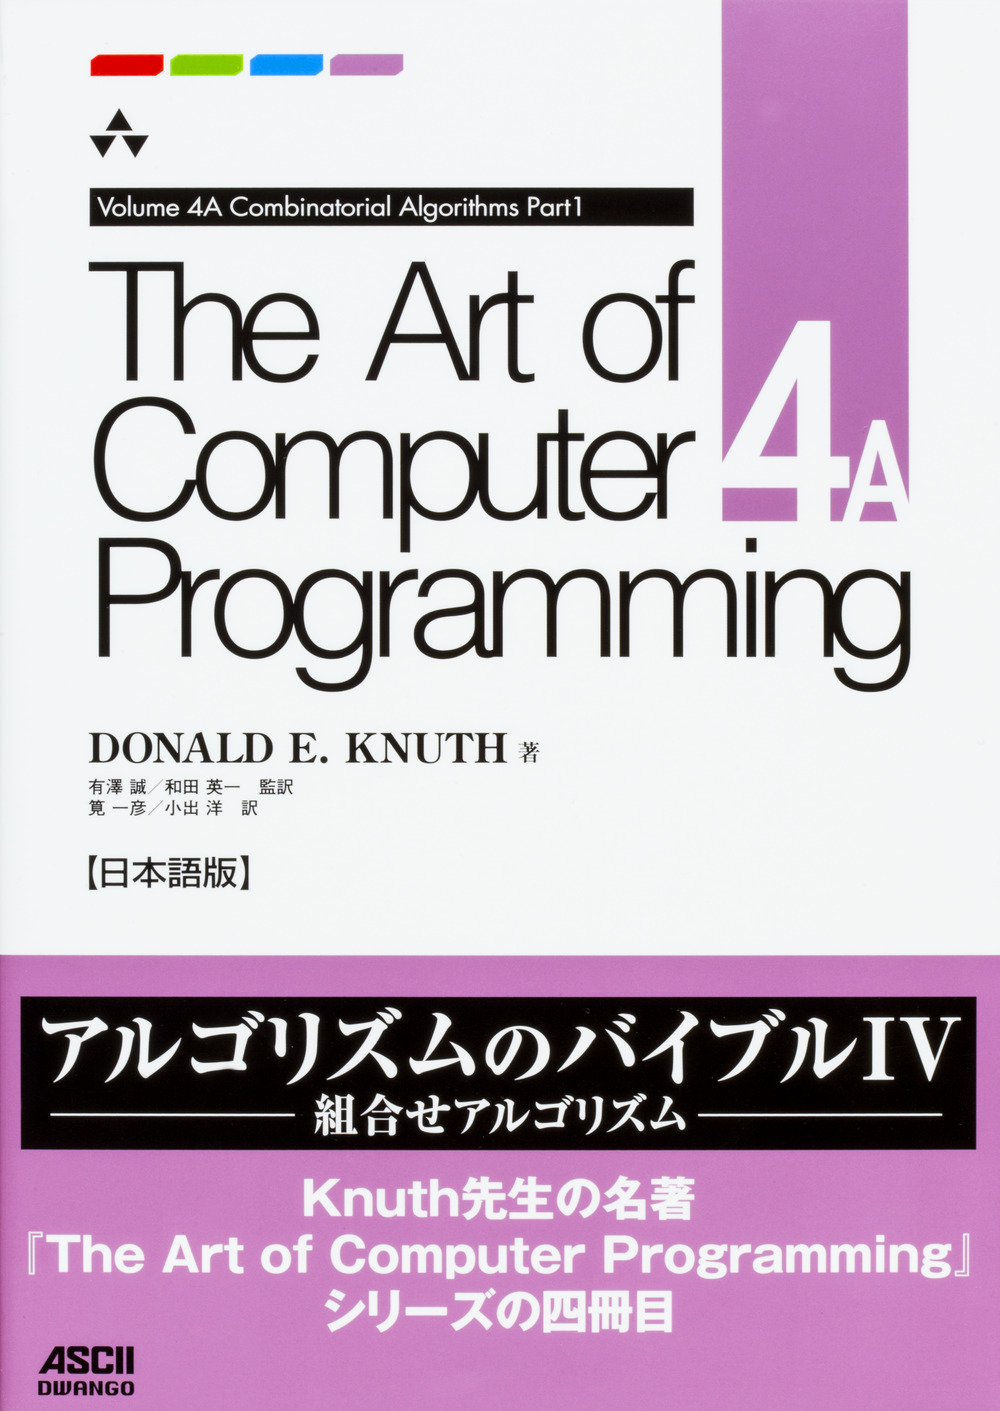 The Art of Computer Programming Volume 4A Combinatorial Algorithms Part1 日本語版の商品画像